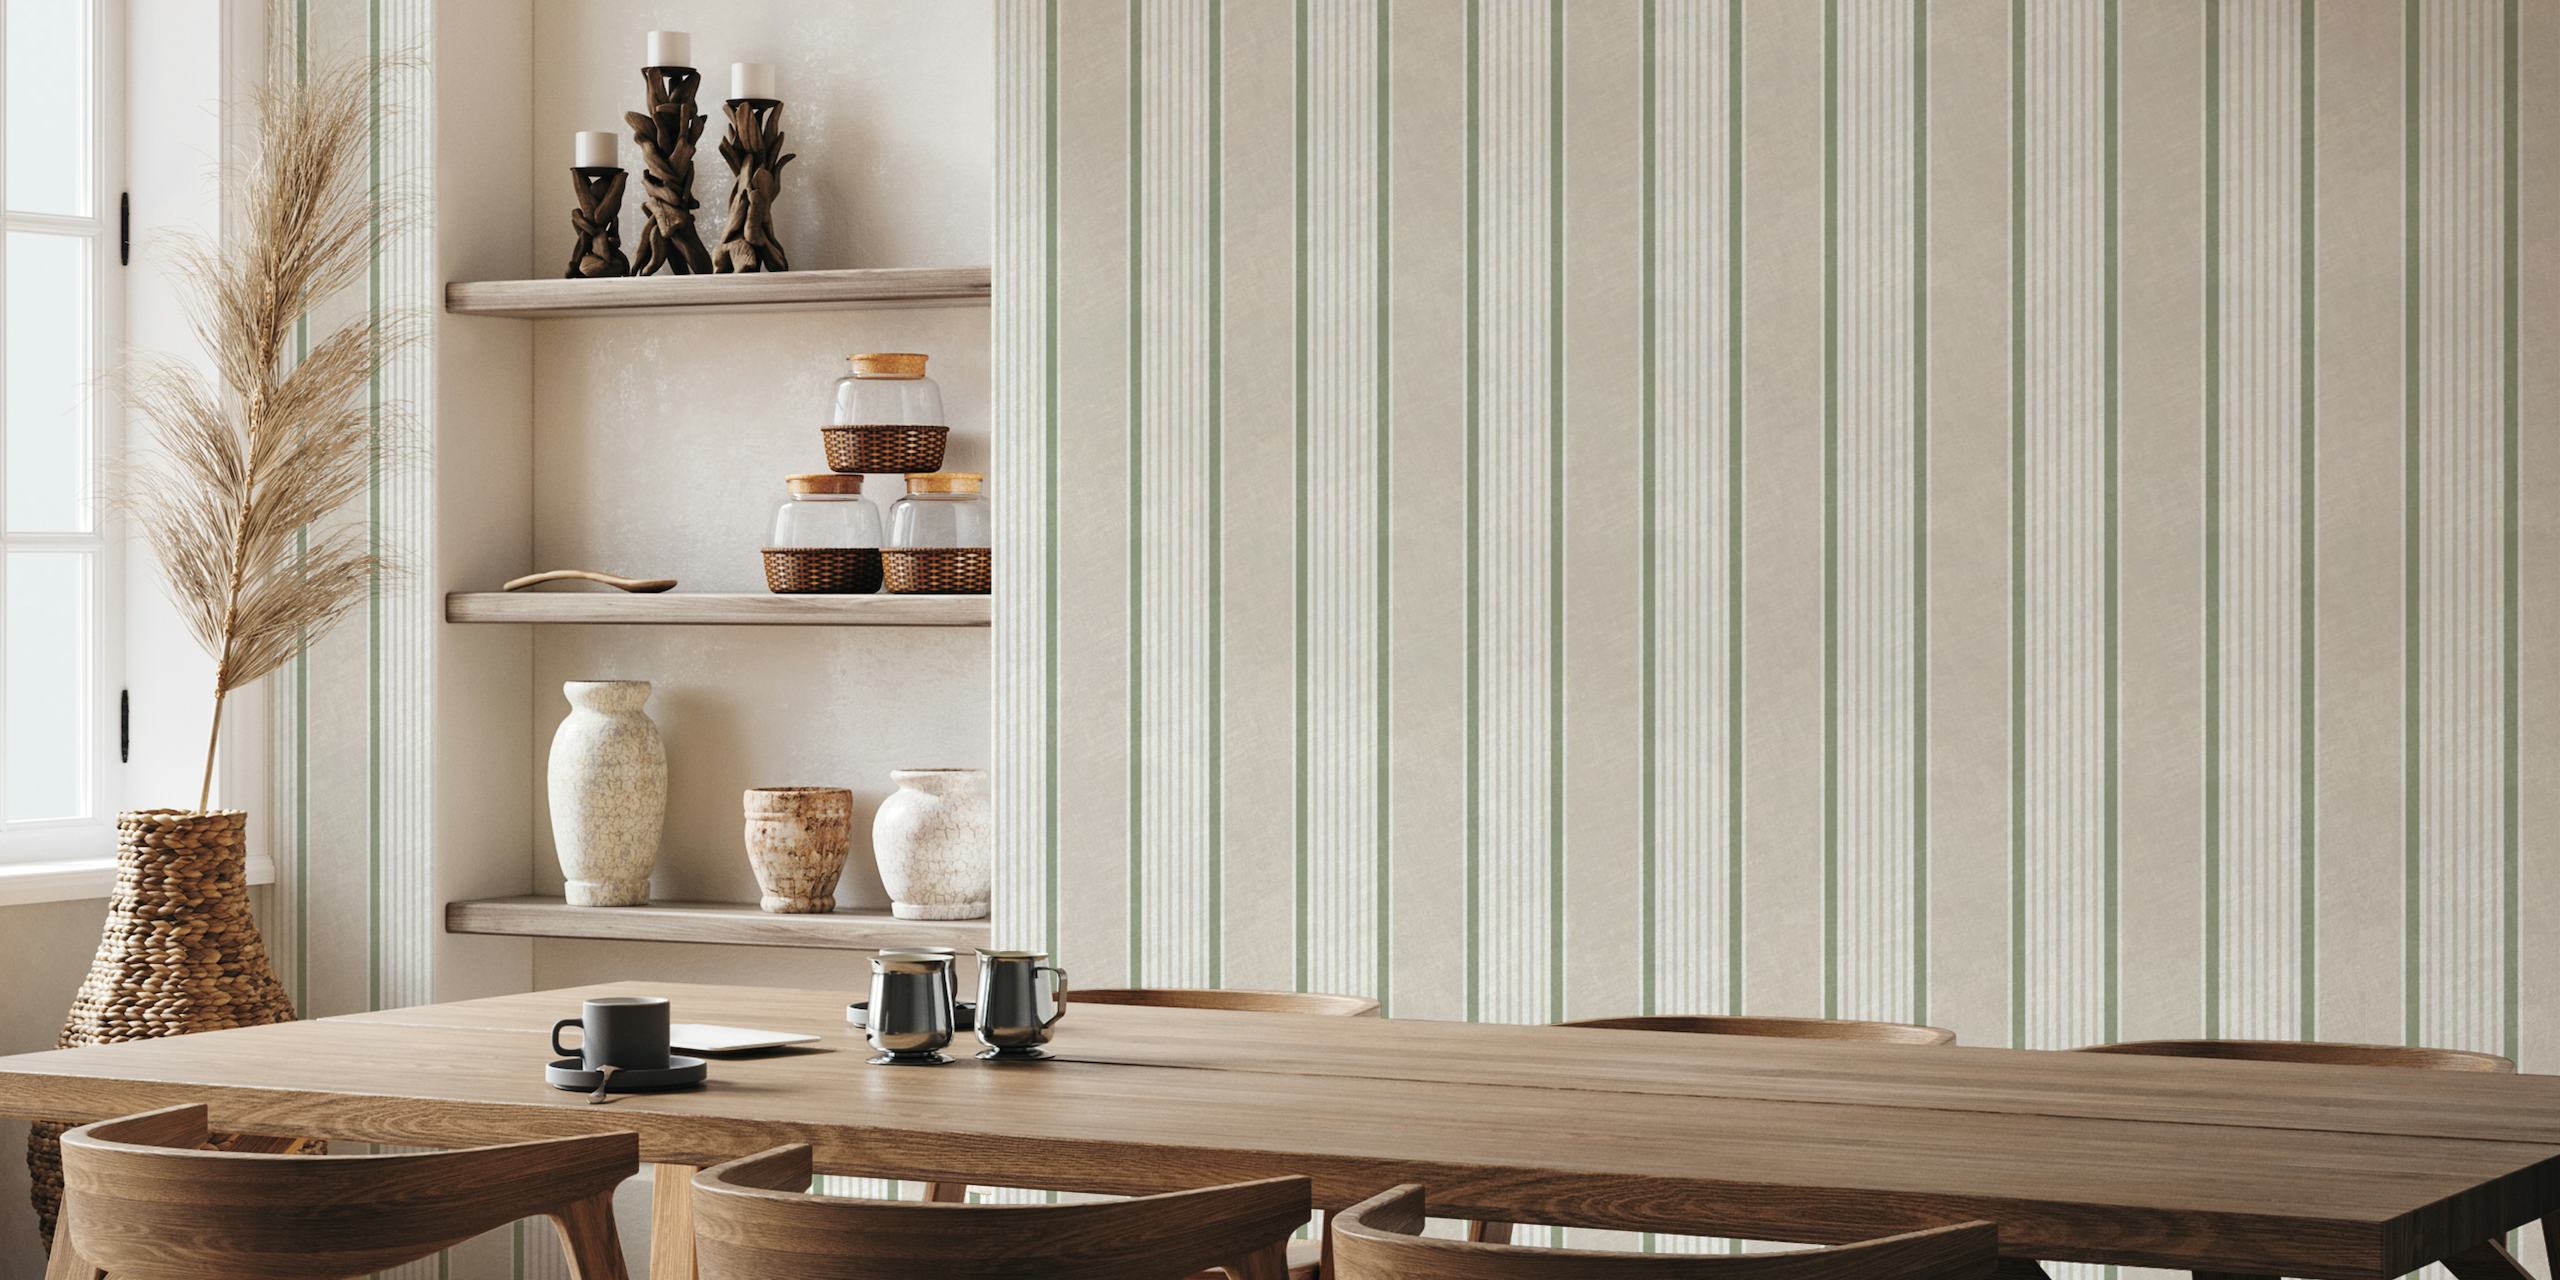 Antique stripes in cream sage green wallpaper